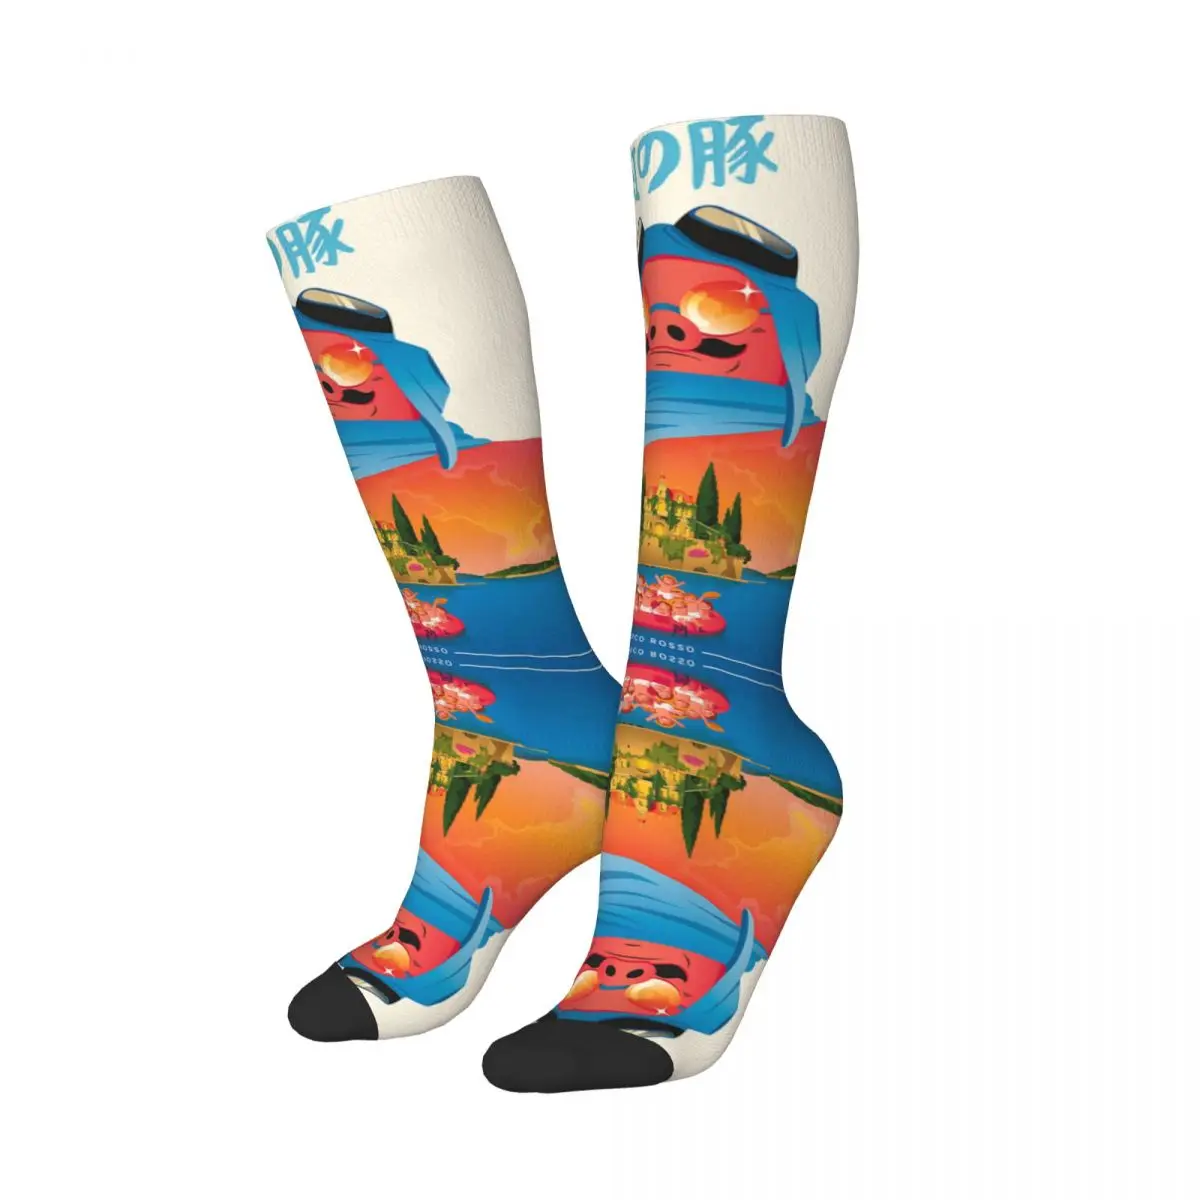 

Cozy Men's Mid Calf Socks Porco Rosso Accessories Cute Crimson Pig Graphic Calf Socks All Seasons Present